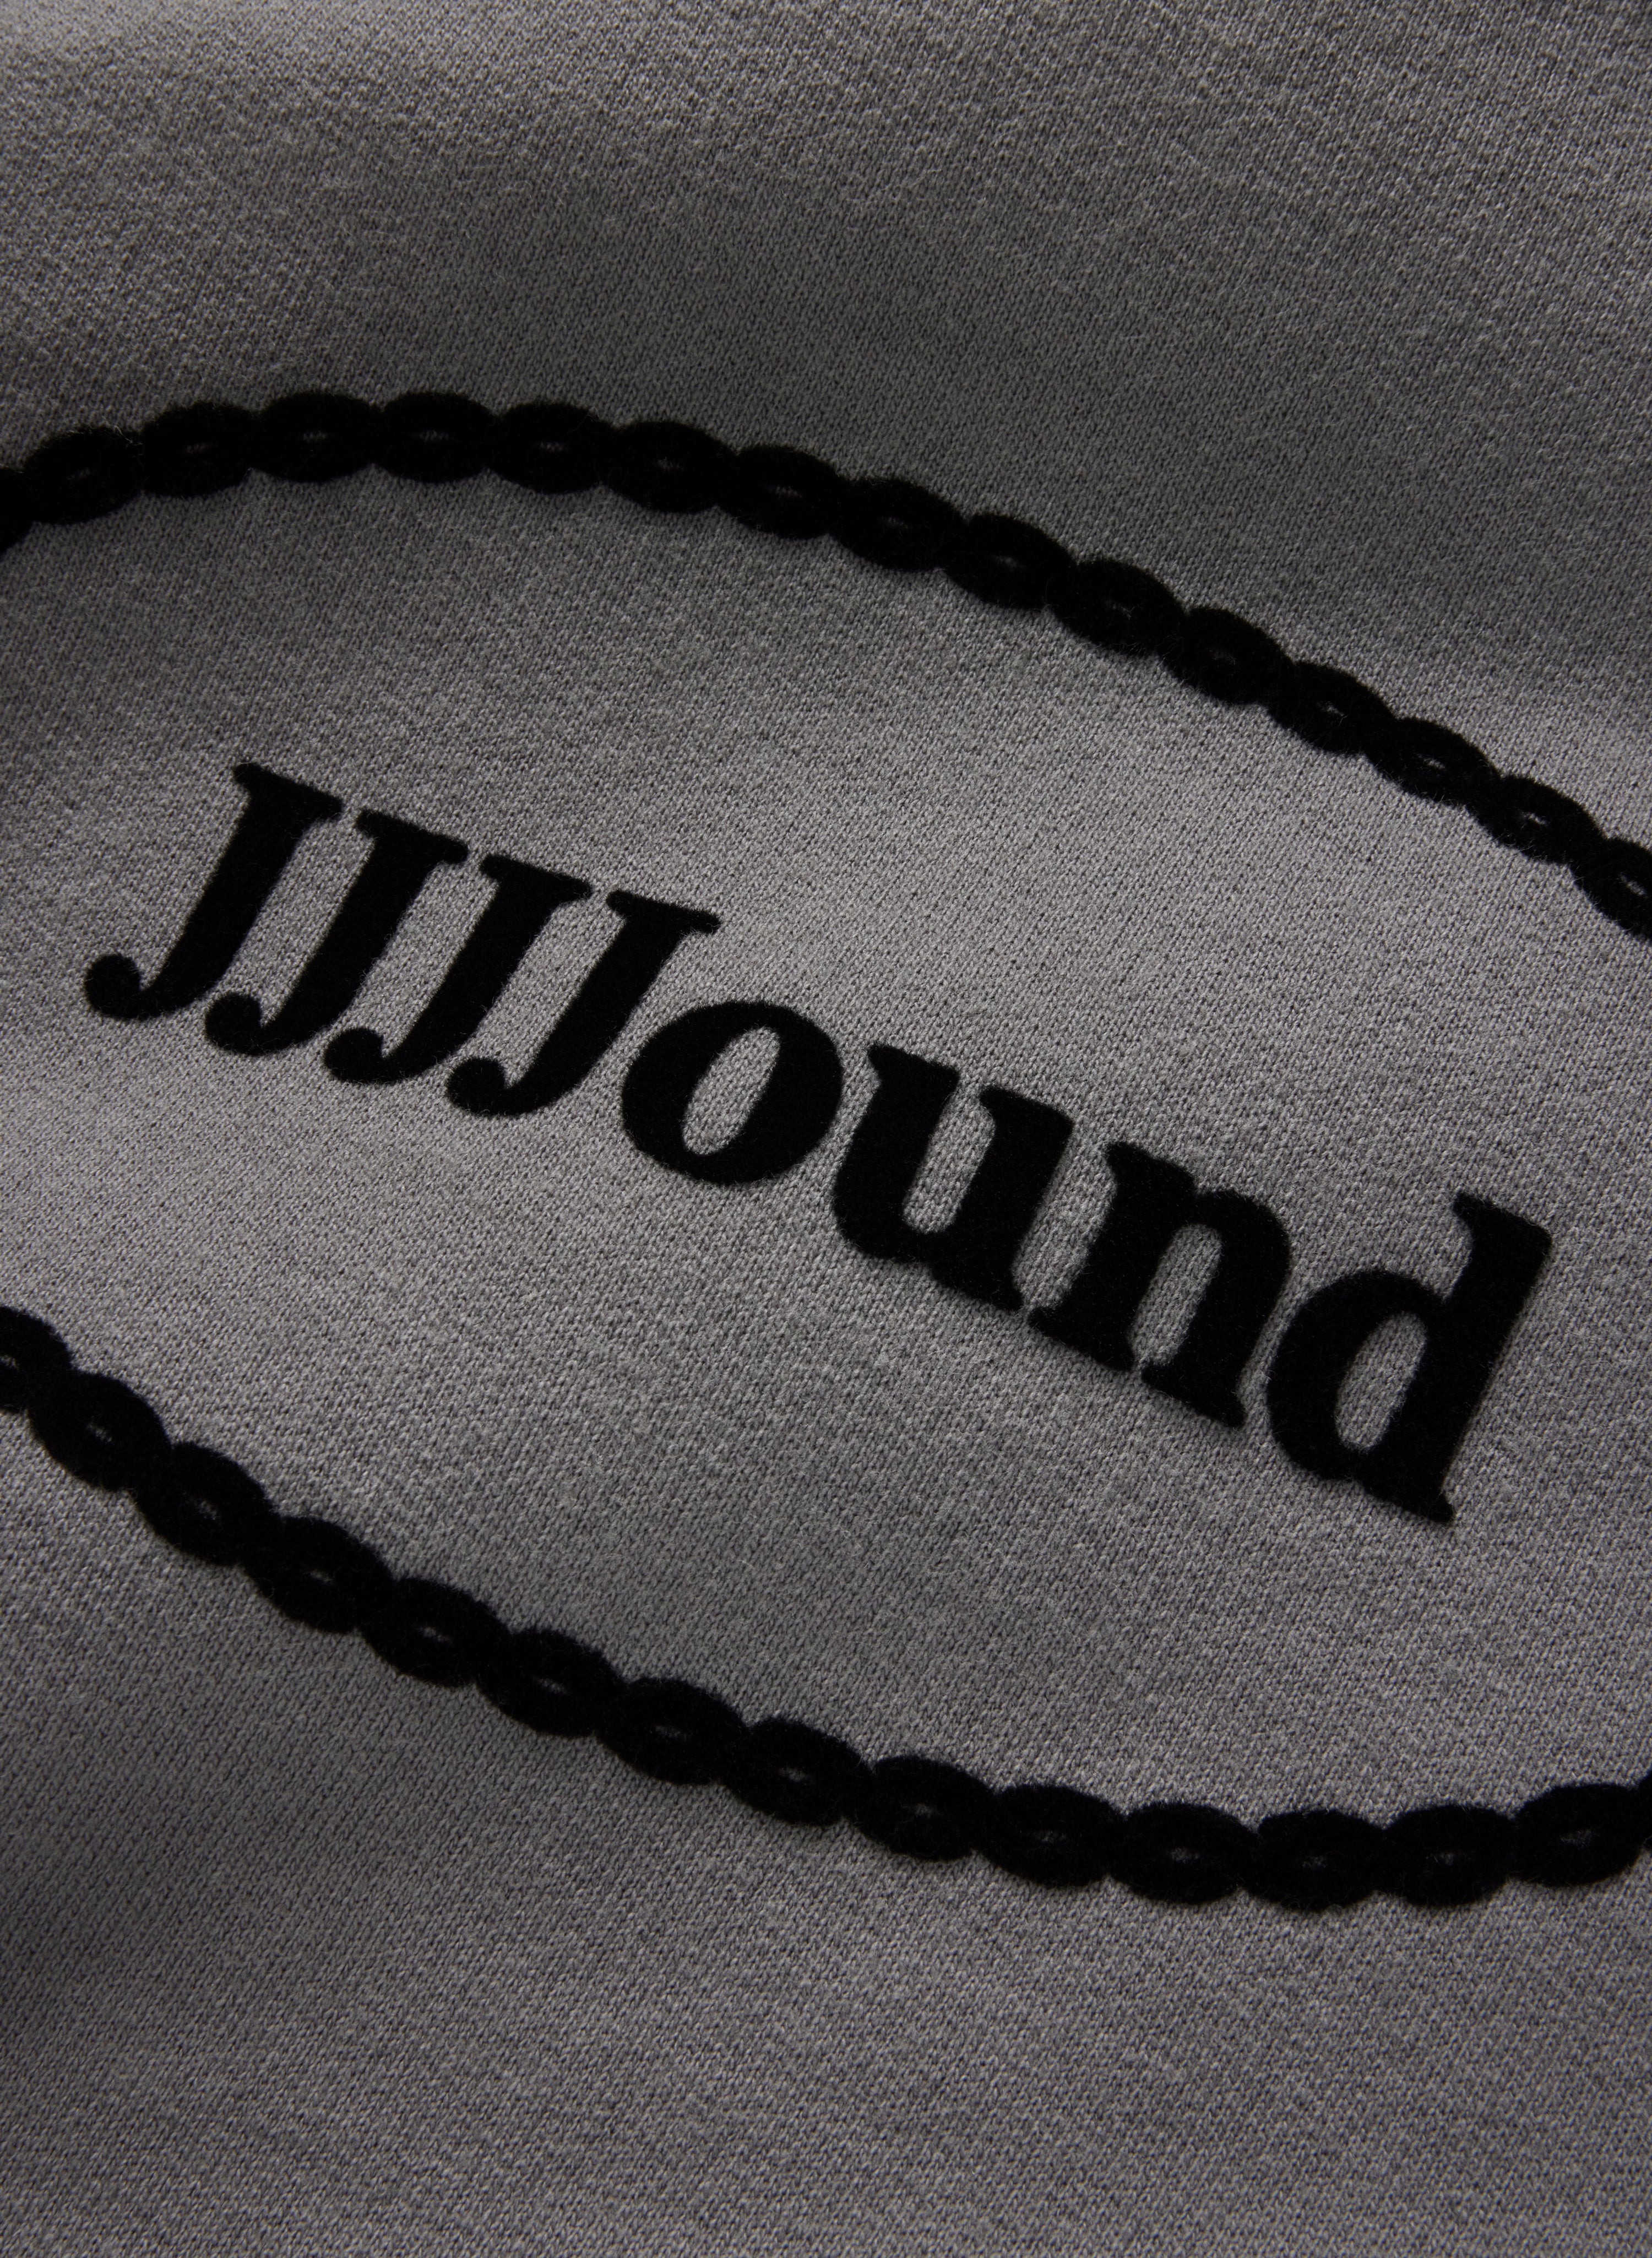 J90 Infinite Logo - Charcoal French Terry – JJJJound